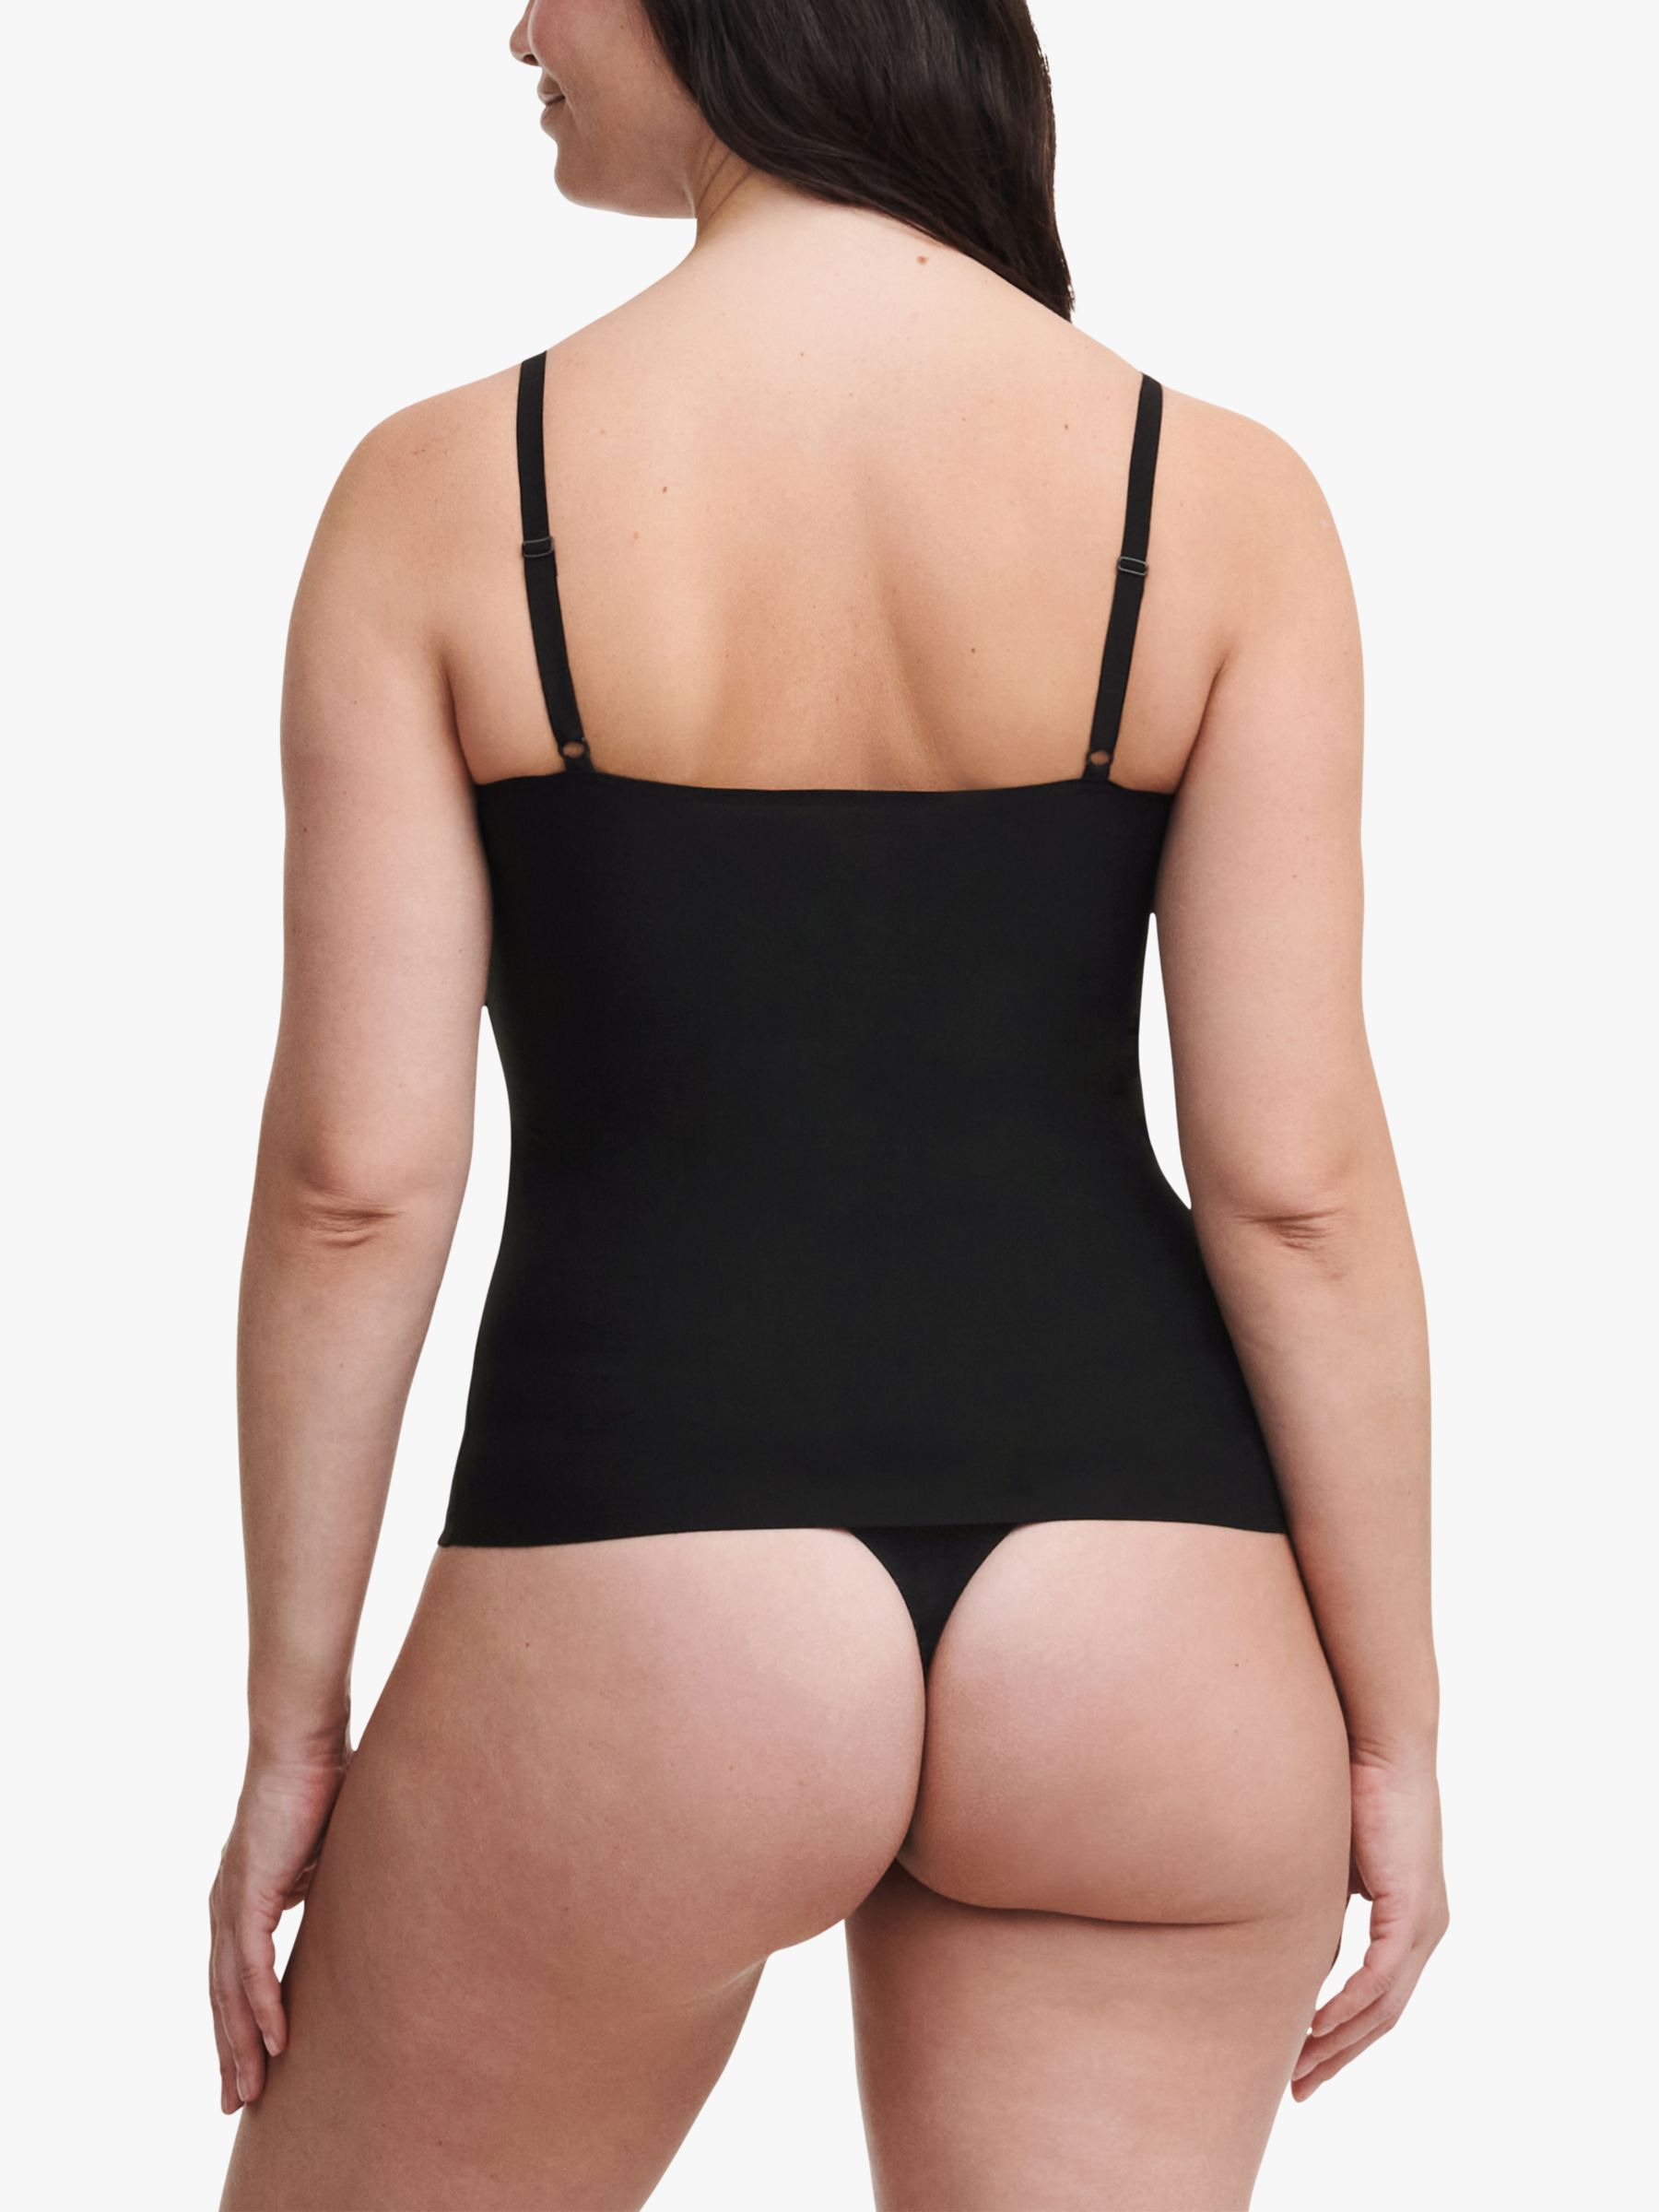 sexy strappy underdress nude black stretch